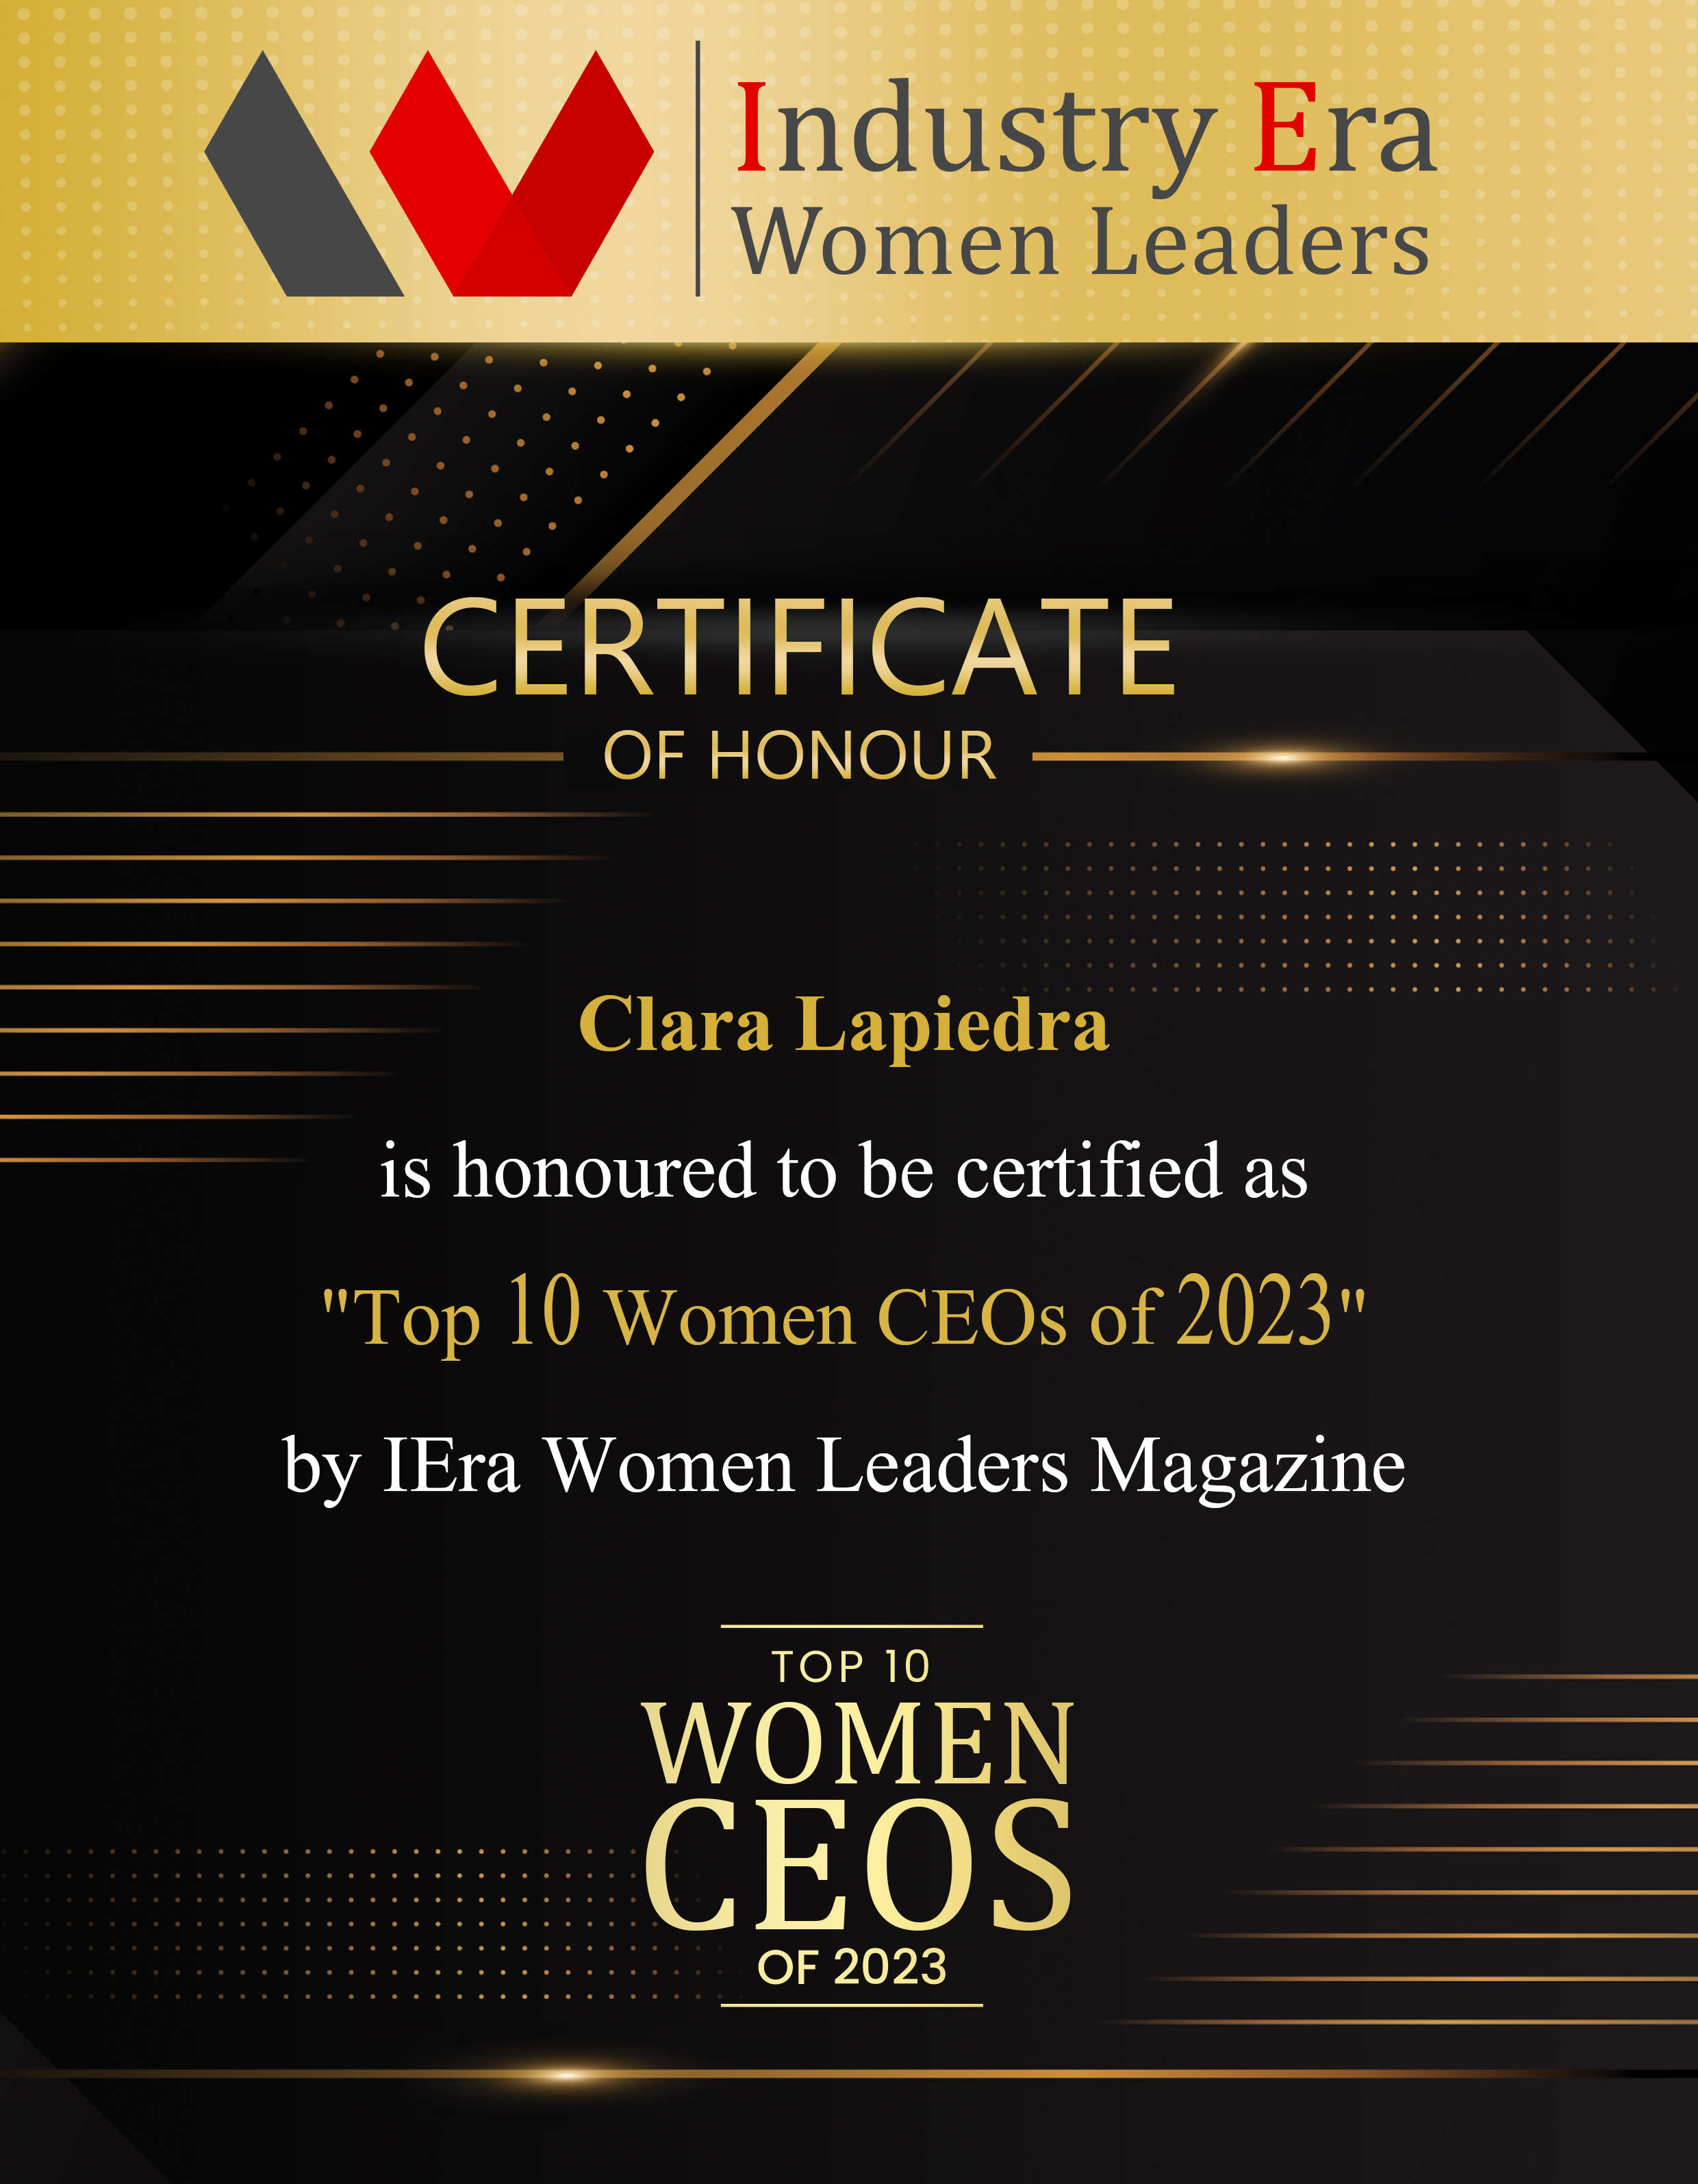 Loren Ridinger, Co-Founder & Senior Executive Vice President of Market America Worldwide | SHOP.COM, Top 10 Inspiring Women Leaders of 2022